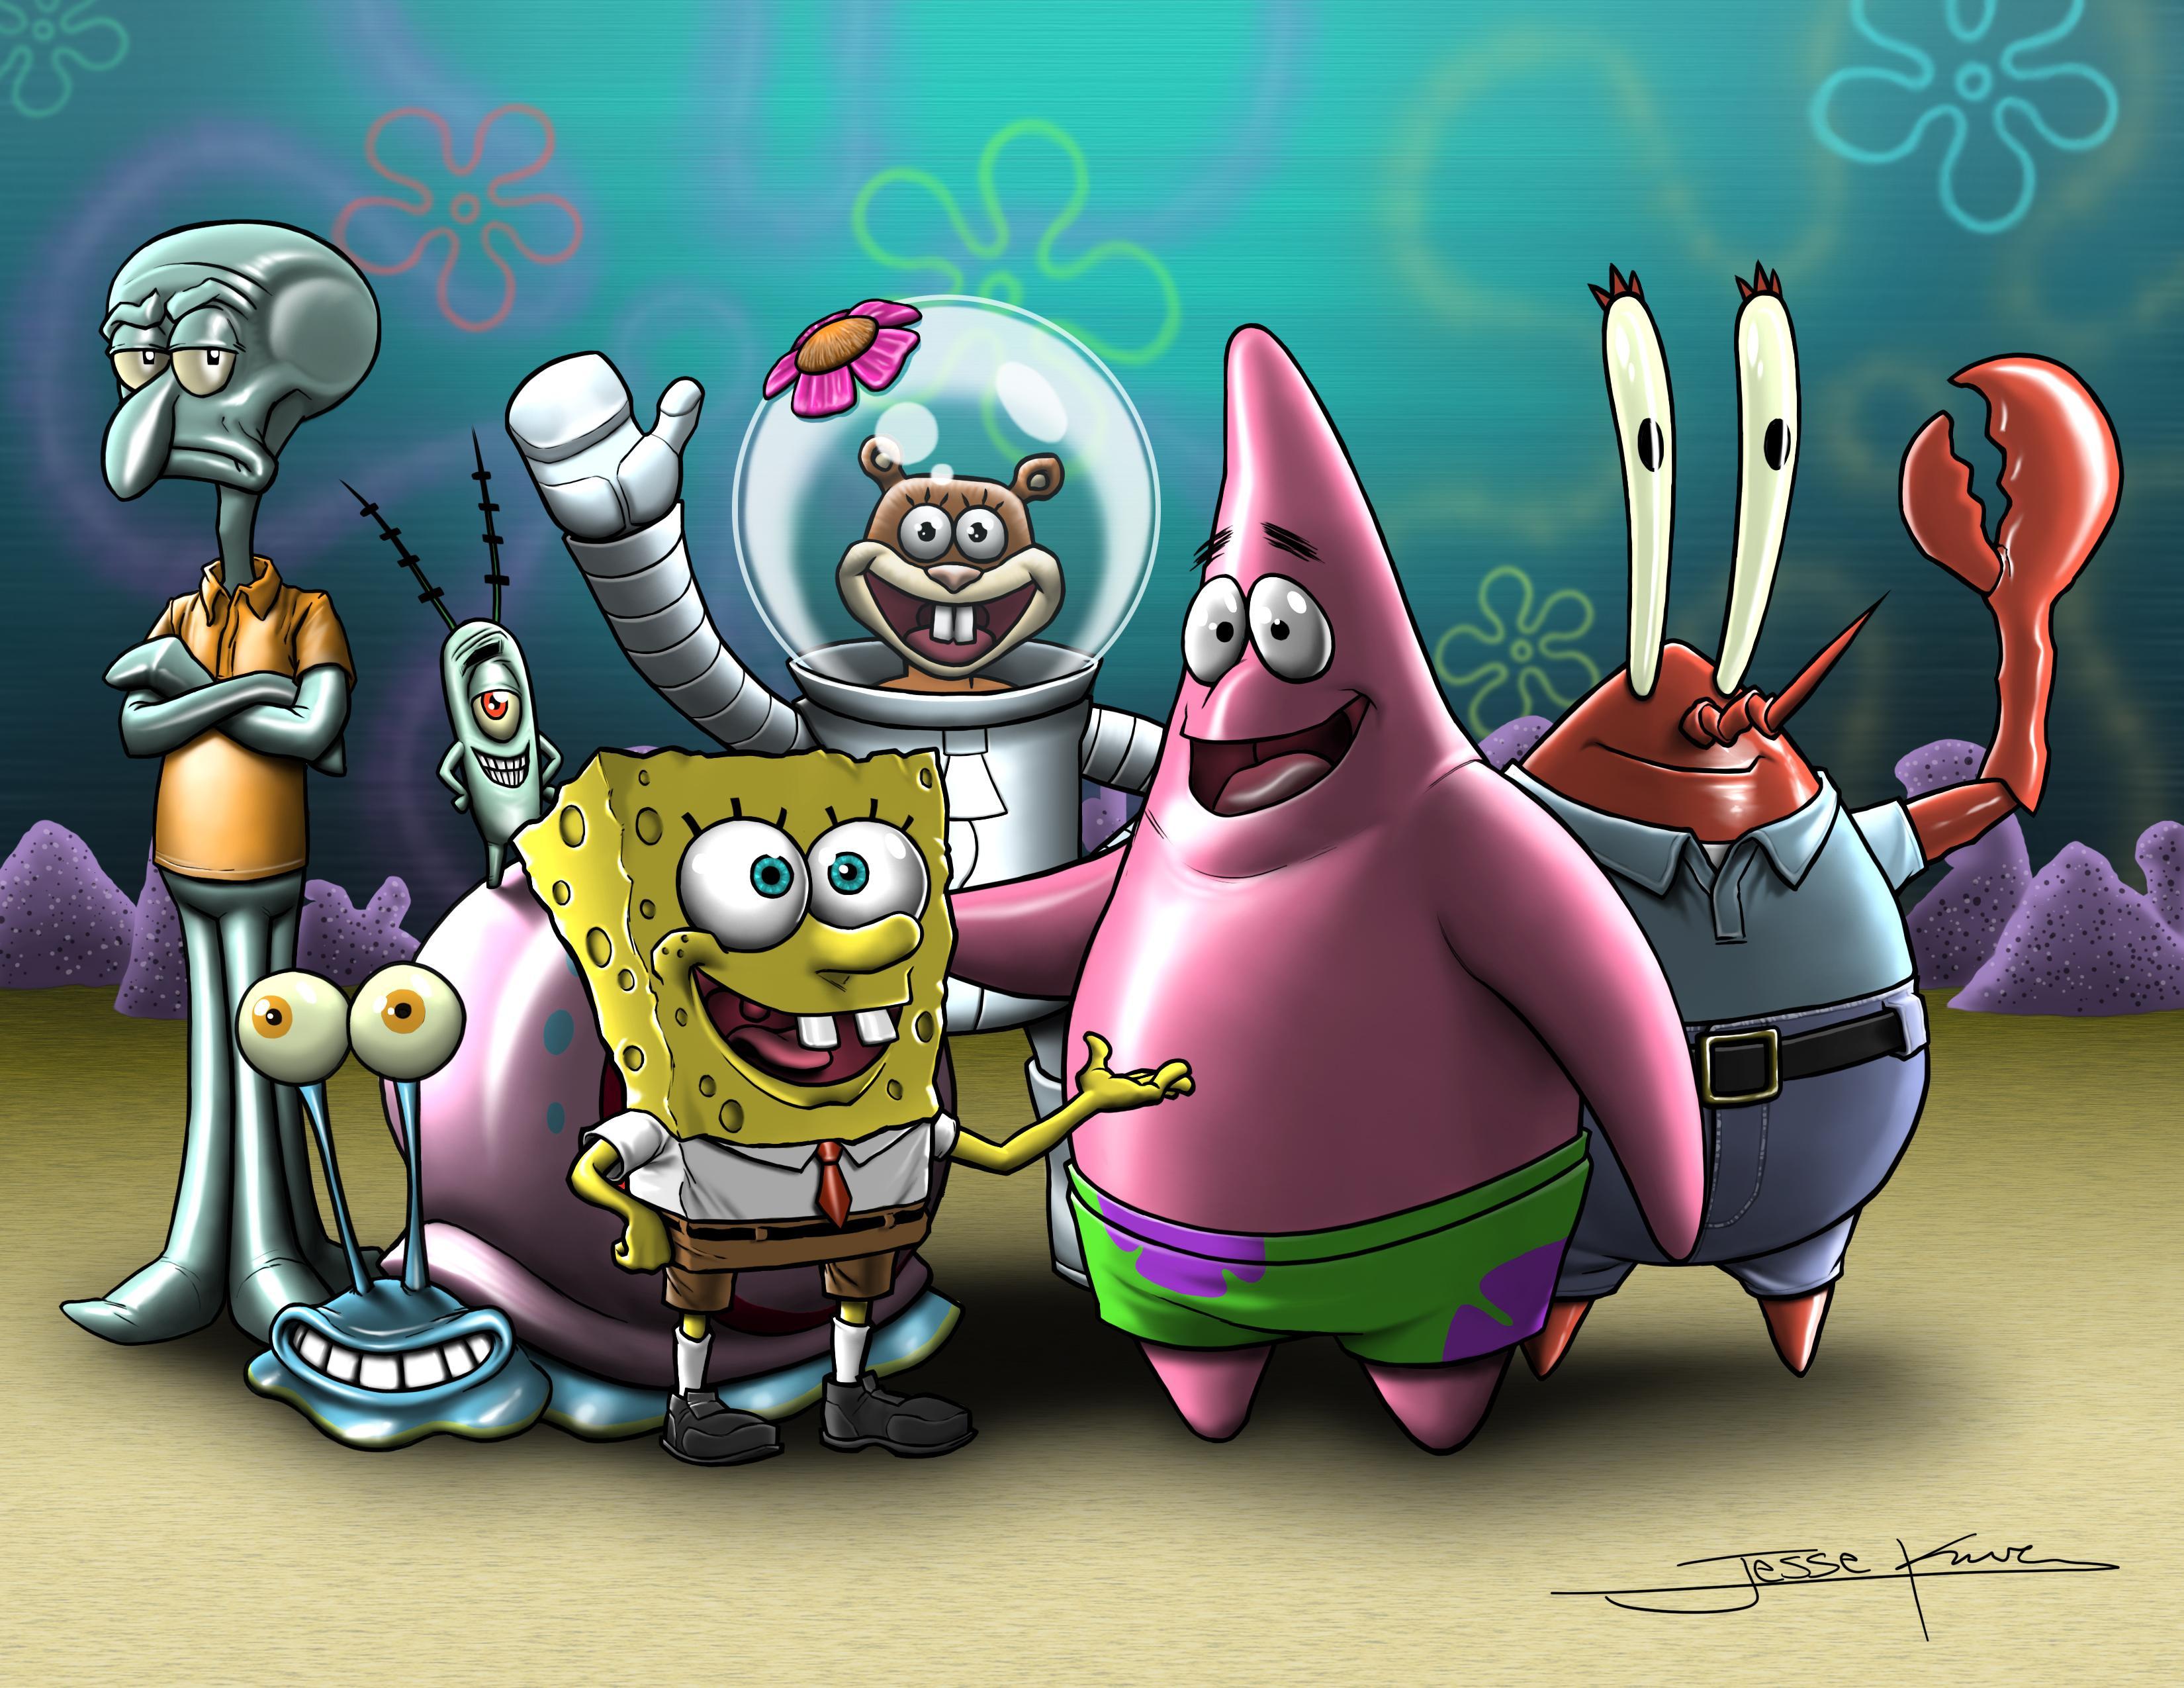 Kartun: Spongebob and friend